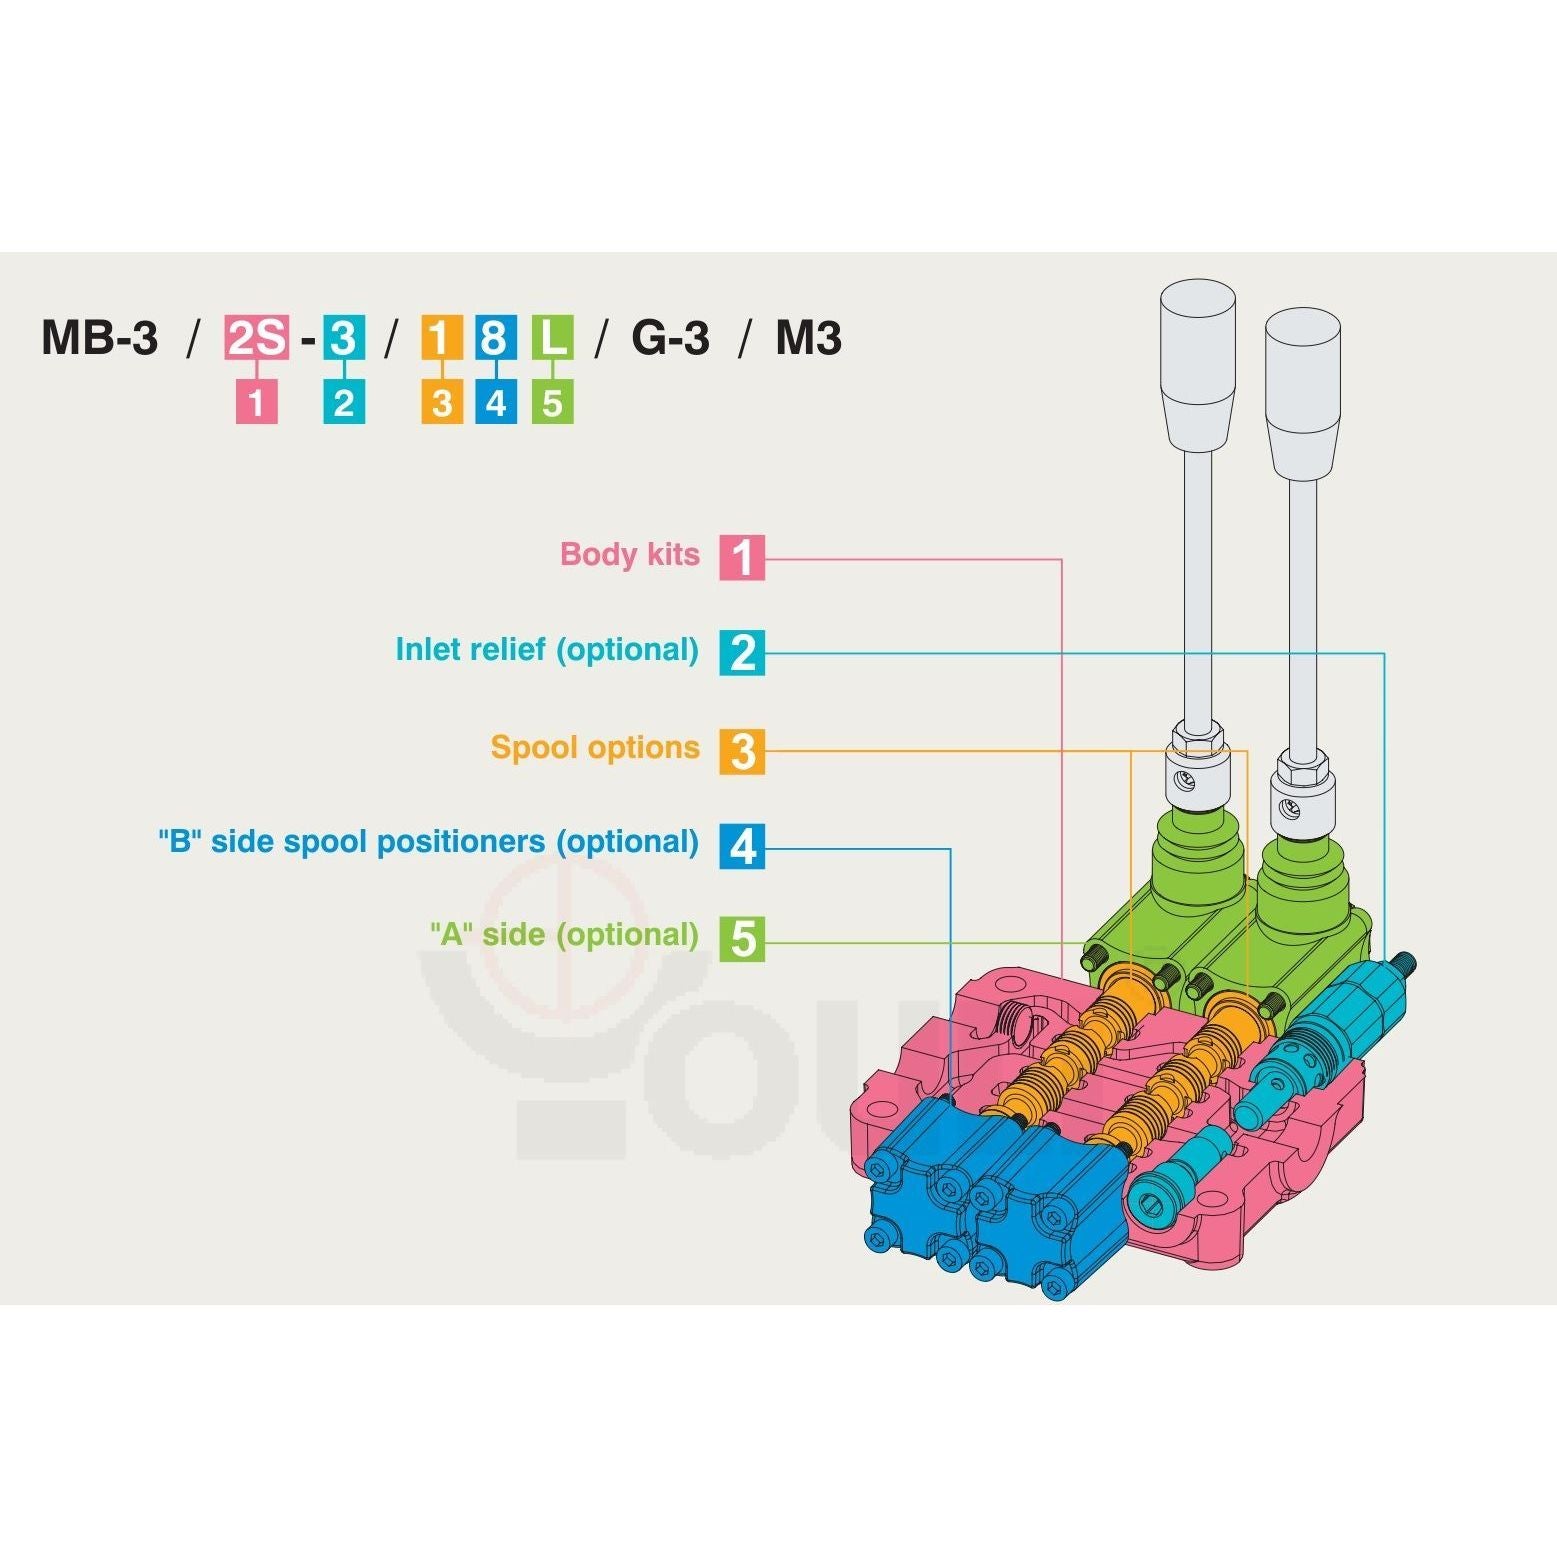 MB-3 Monoblock Valve, 2 Section : Youli MB-3 Series Monoblock Directional Control Valve, 2 Sections, 12 gpm, 900-2900 psi